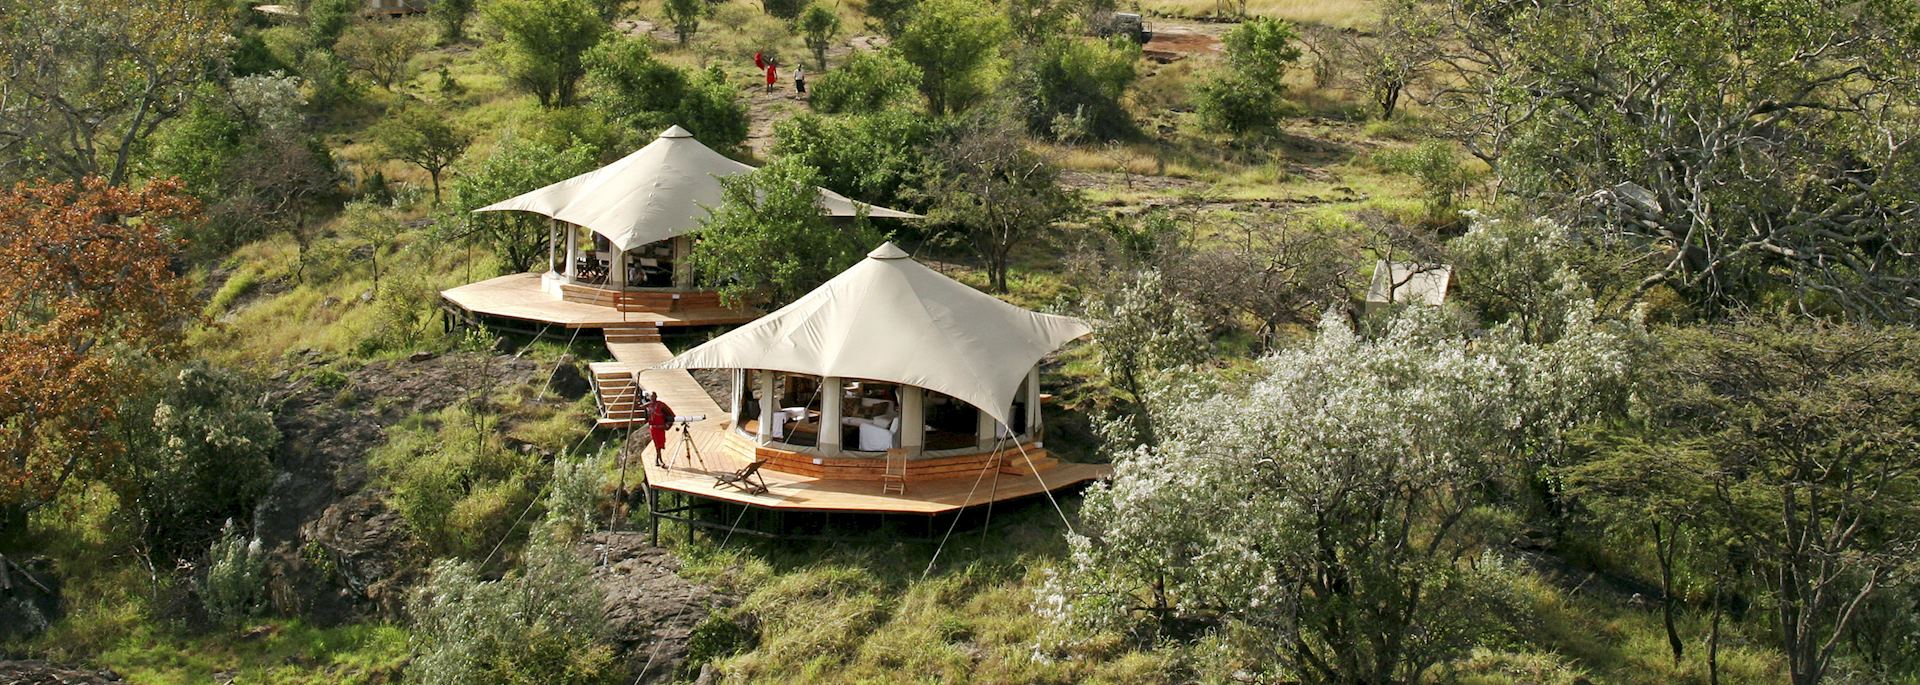 Ol Seki Hemingways Camp, Masai Mara National Reserve